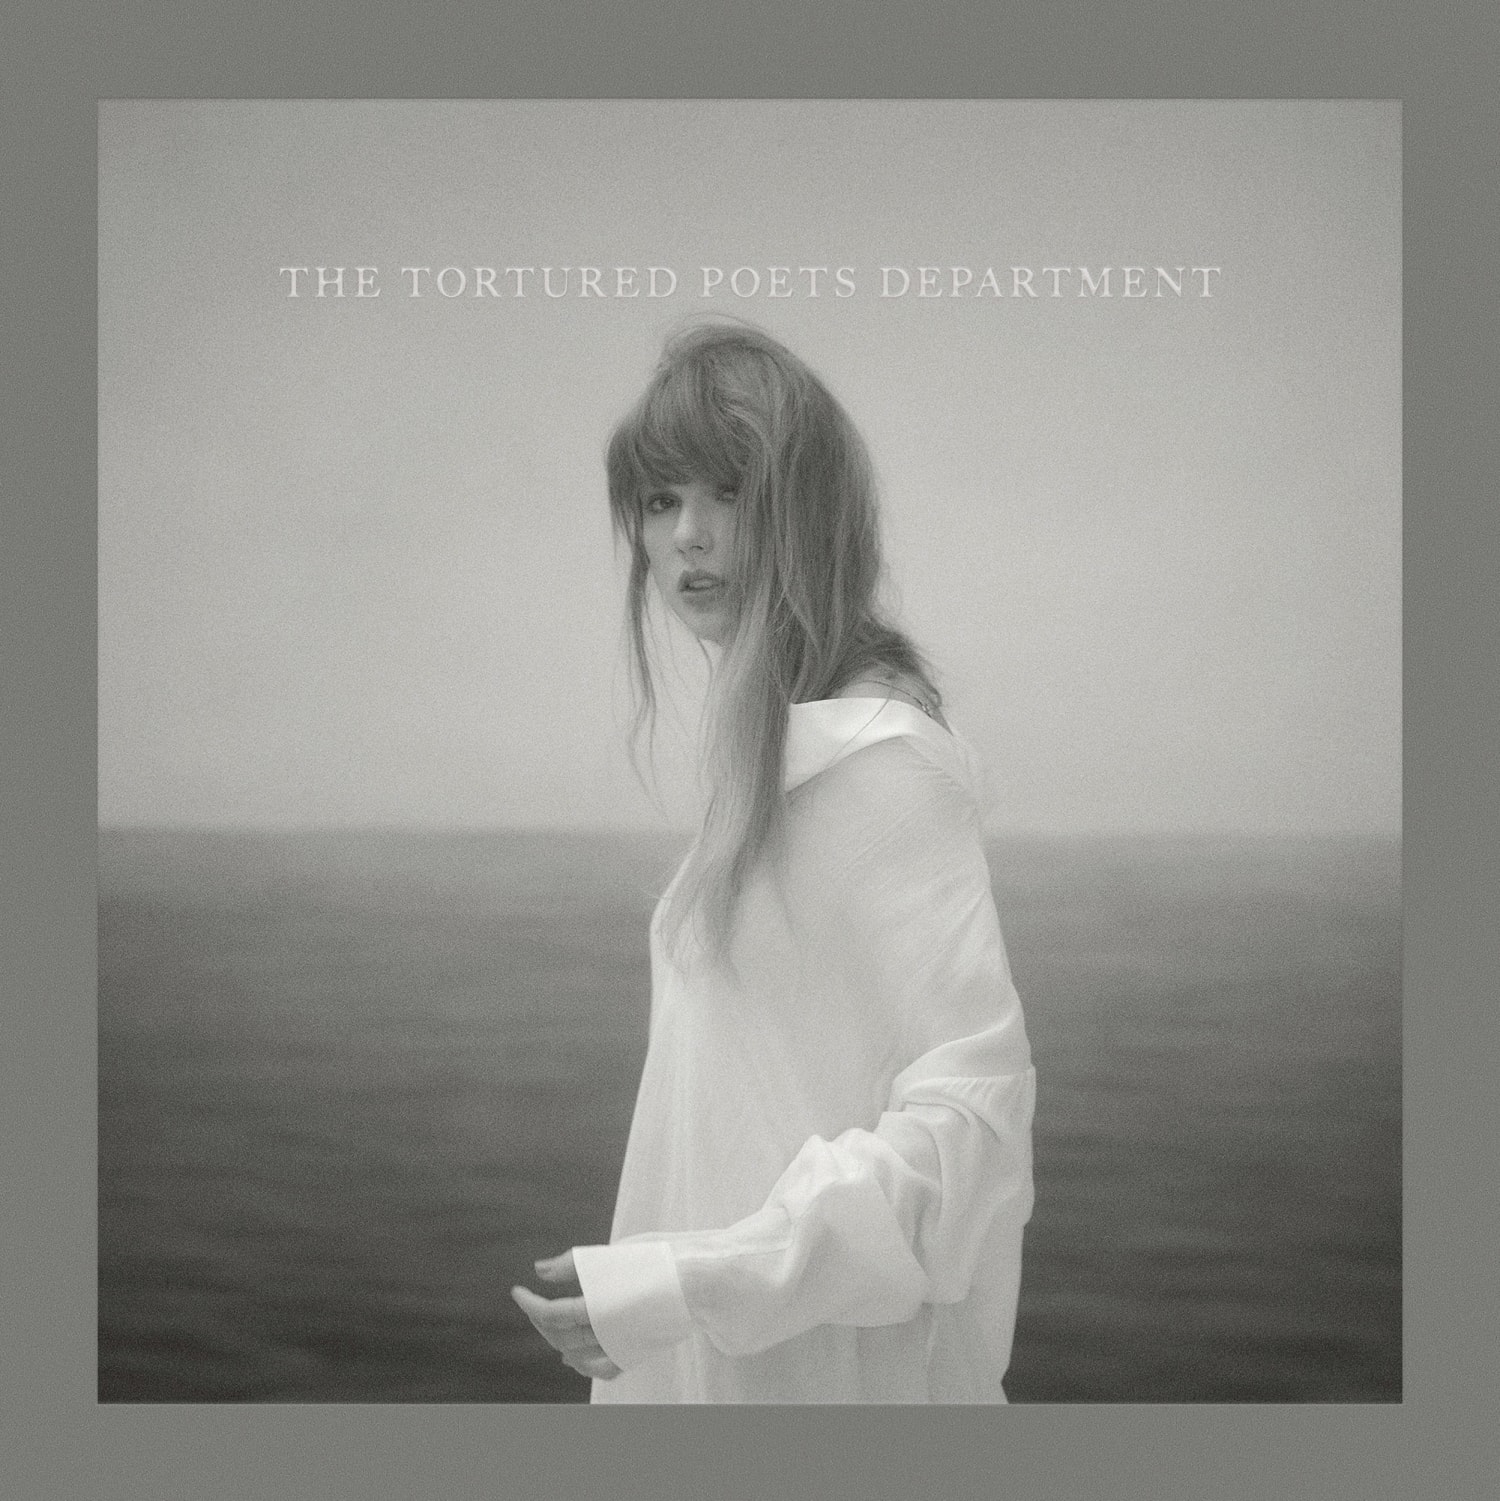 Taylor Swift's 'The Tortured Poets Department' album breaks 